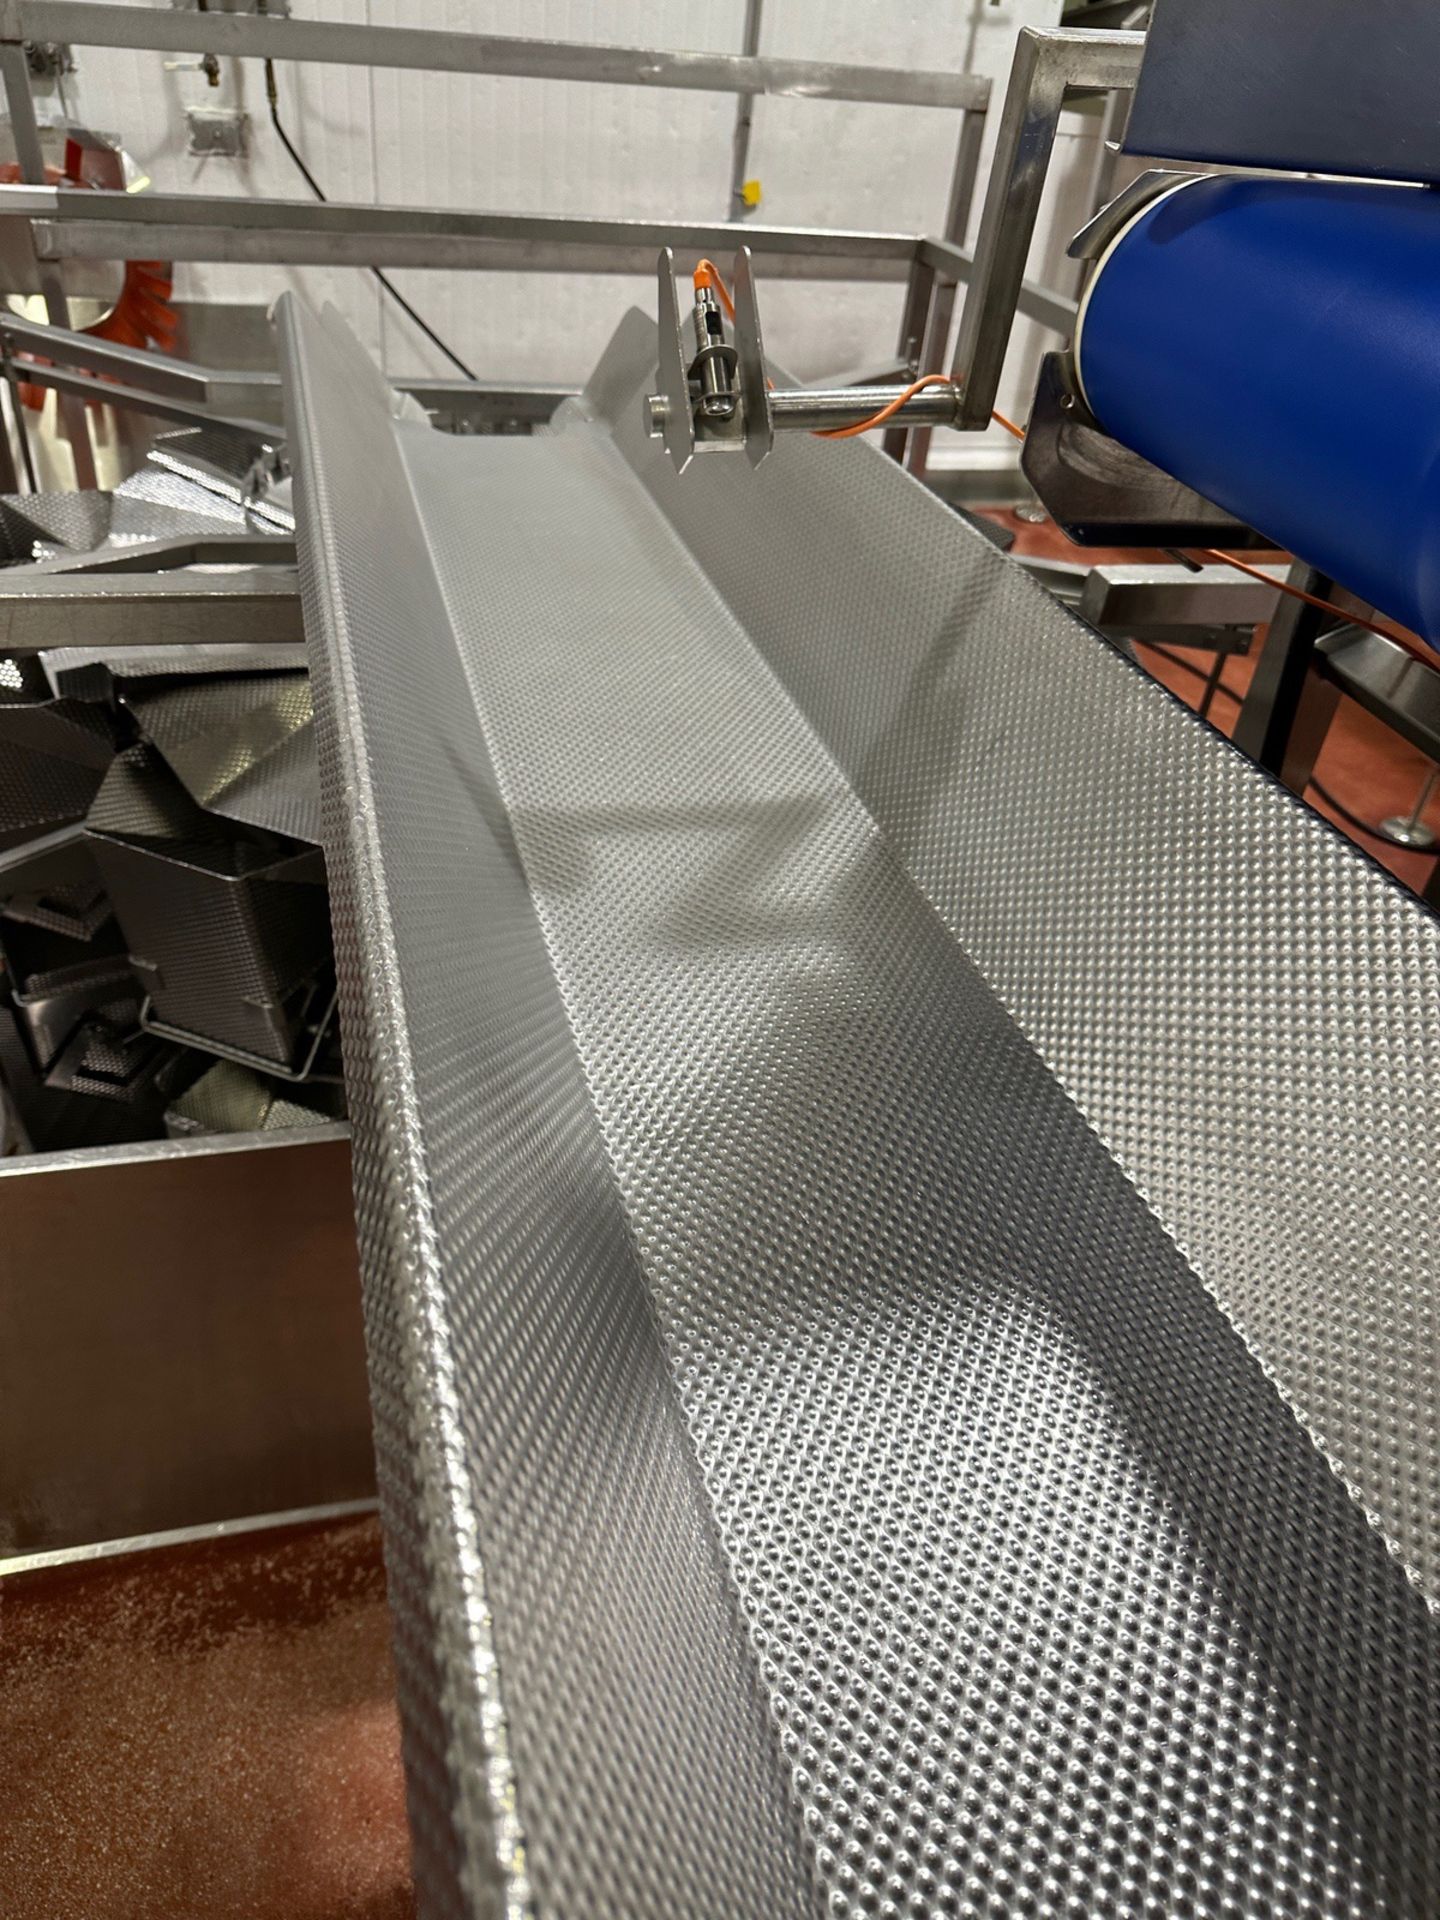 FastBack Dimple Pan Vibratory Conveyor, 17" Width x 84" OA Length - Image 2 of 4